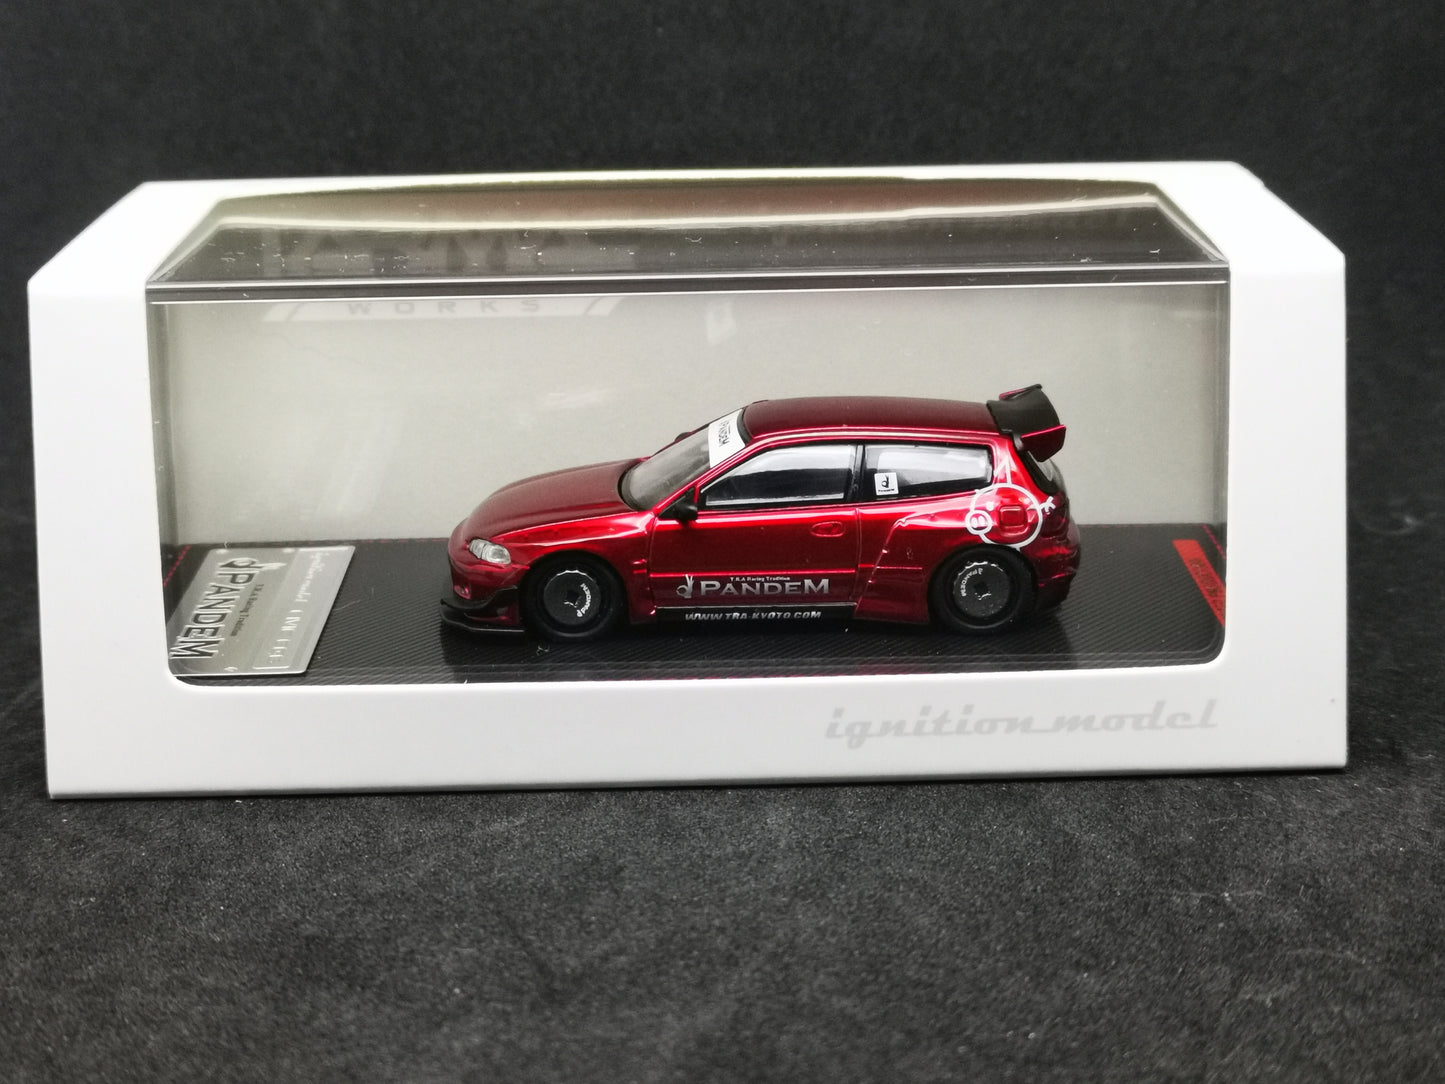 Ignition Model 1:64 Scale Honda Civic Eg6 Pandem Rocket Bunny (Metallic red)